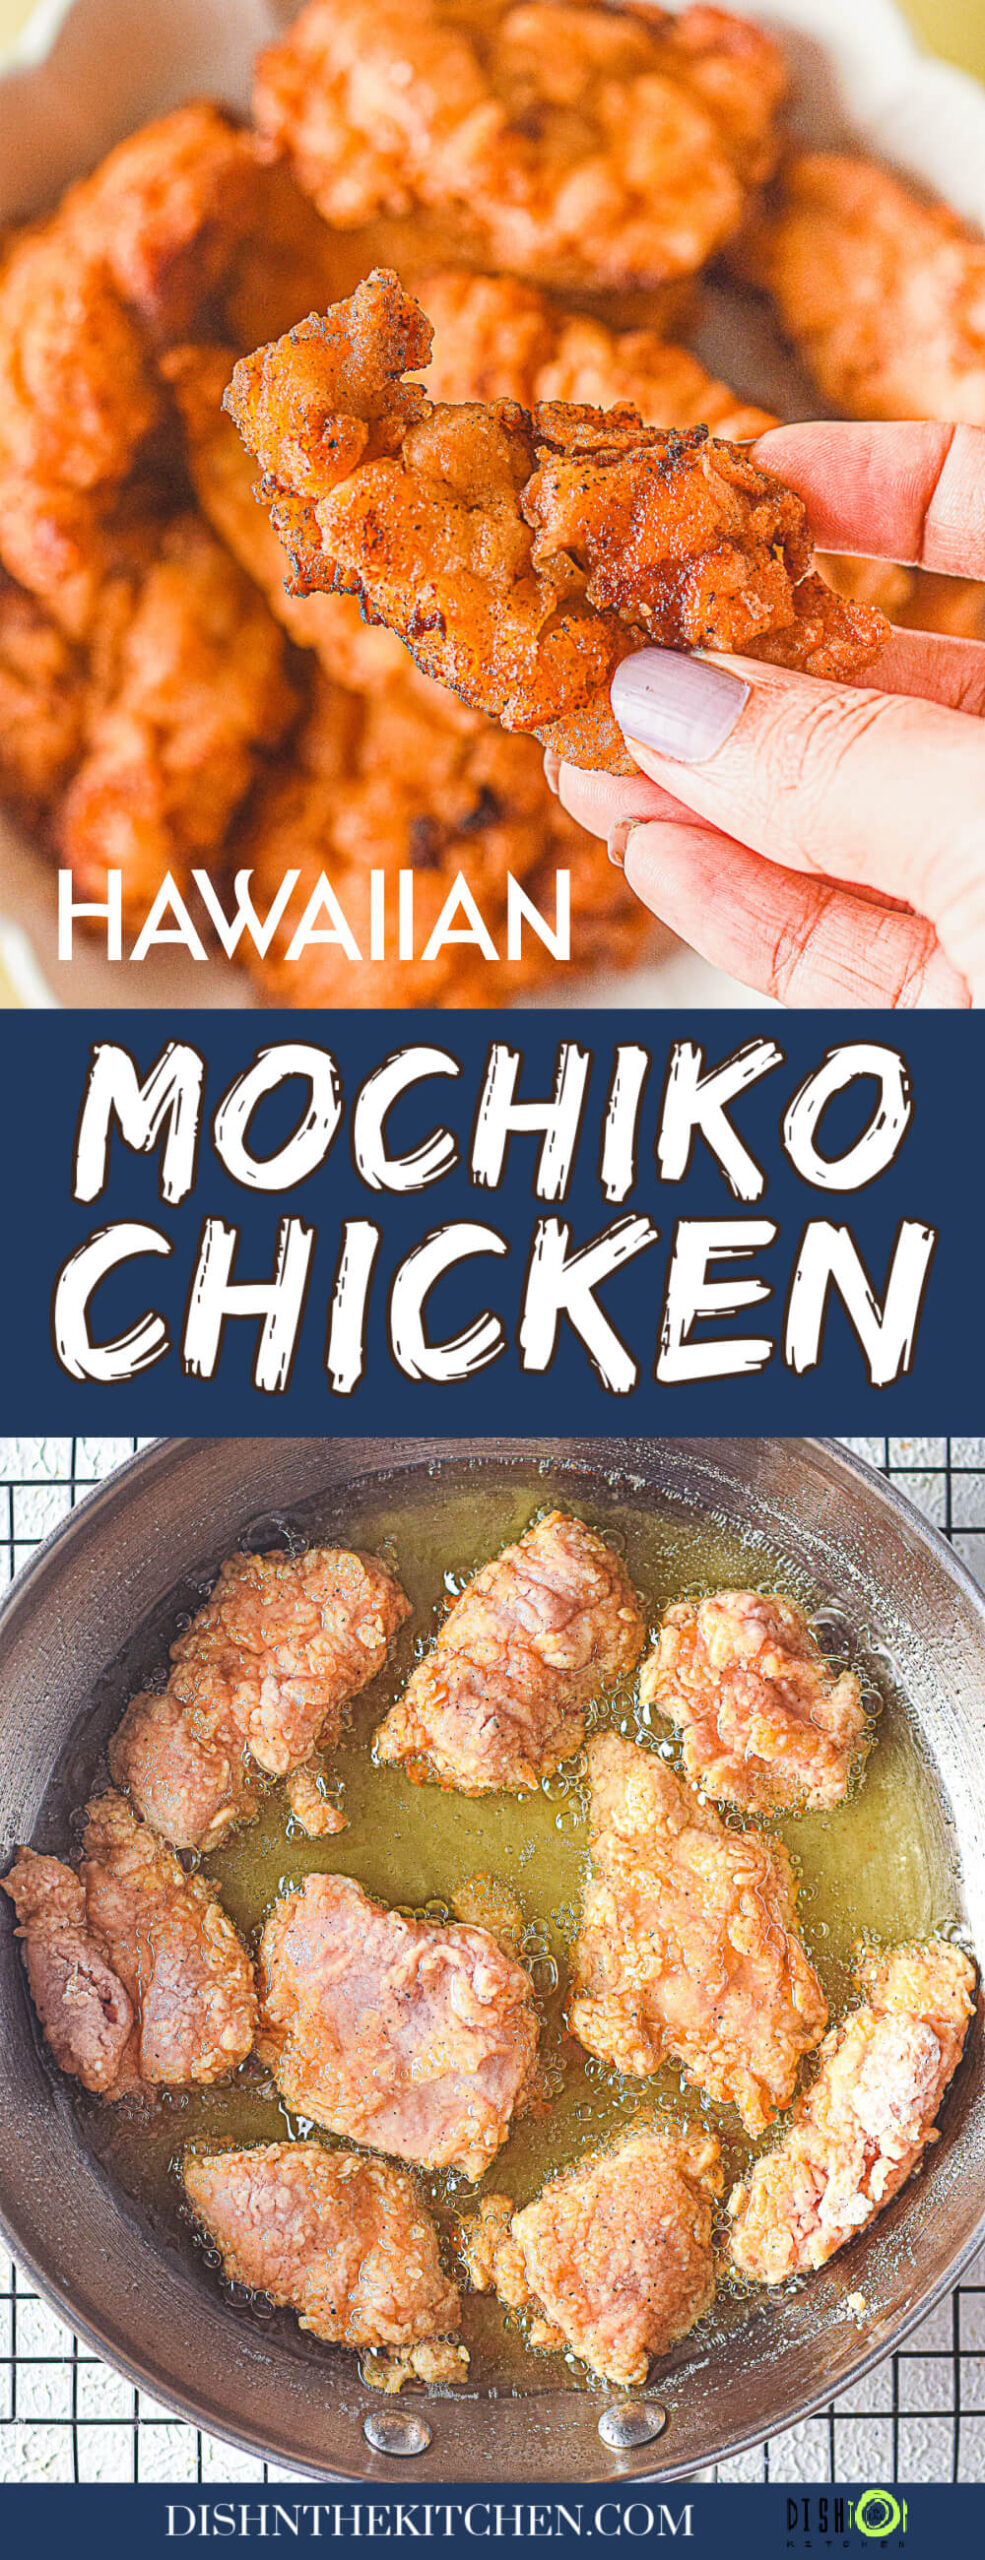 Pinterest image featuring golden fried Hawaiian Mochiko chicken over a pot of frying oil.